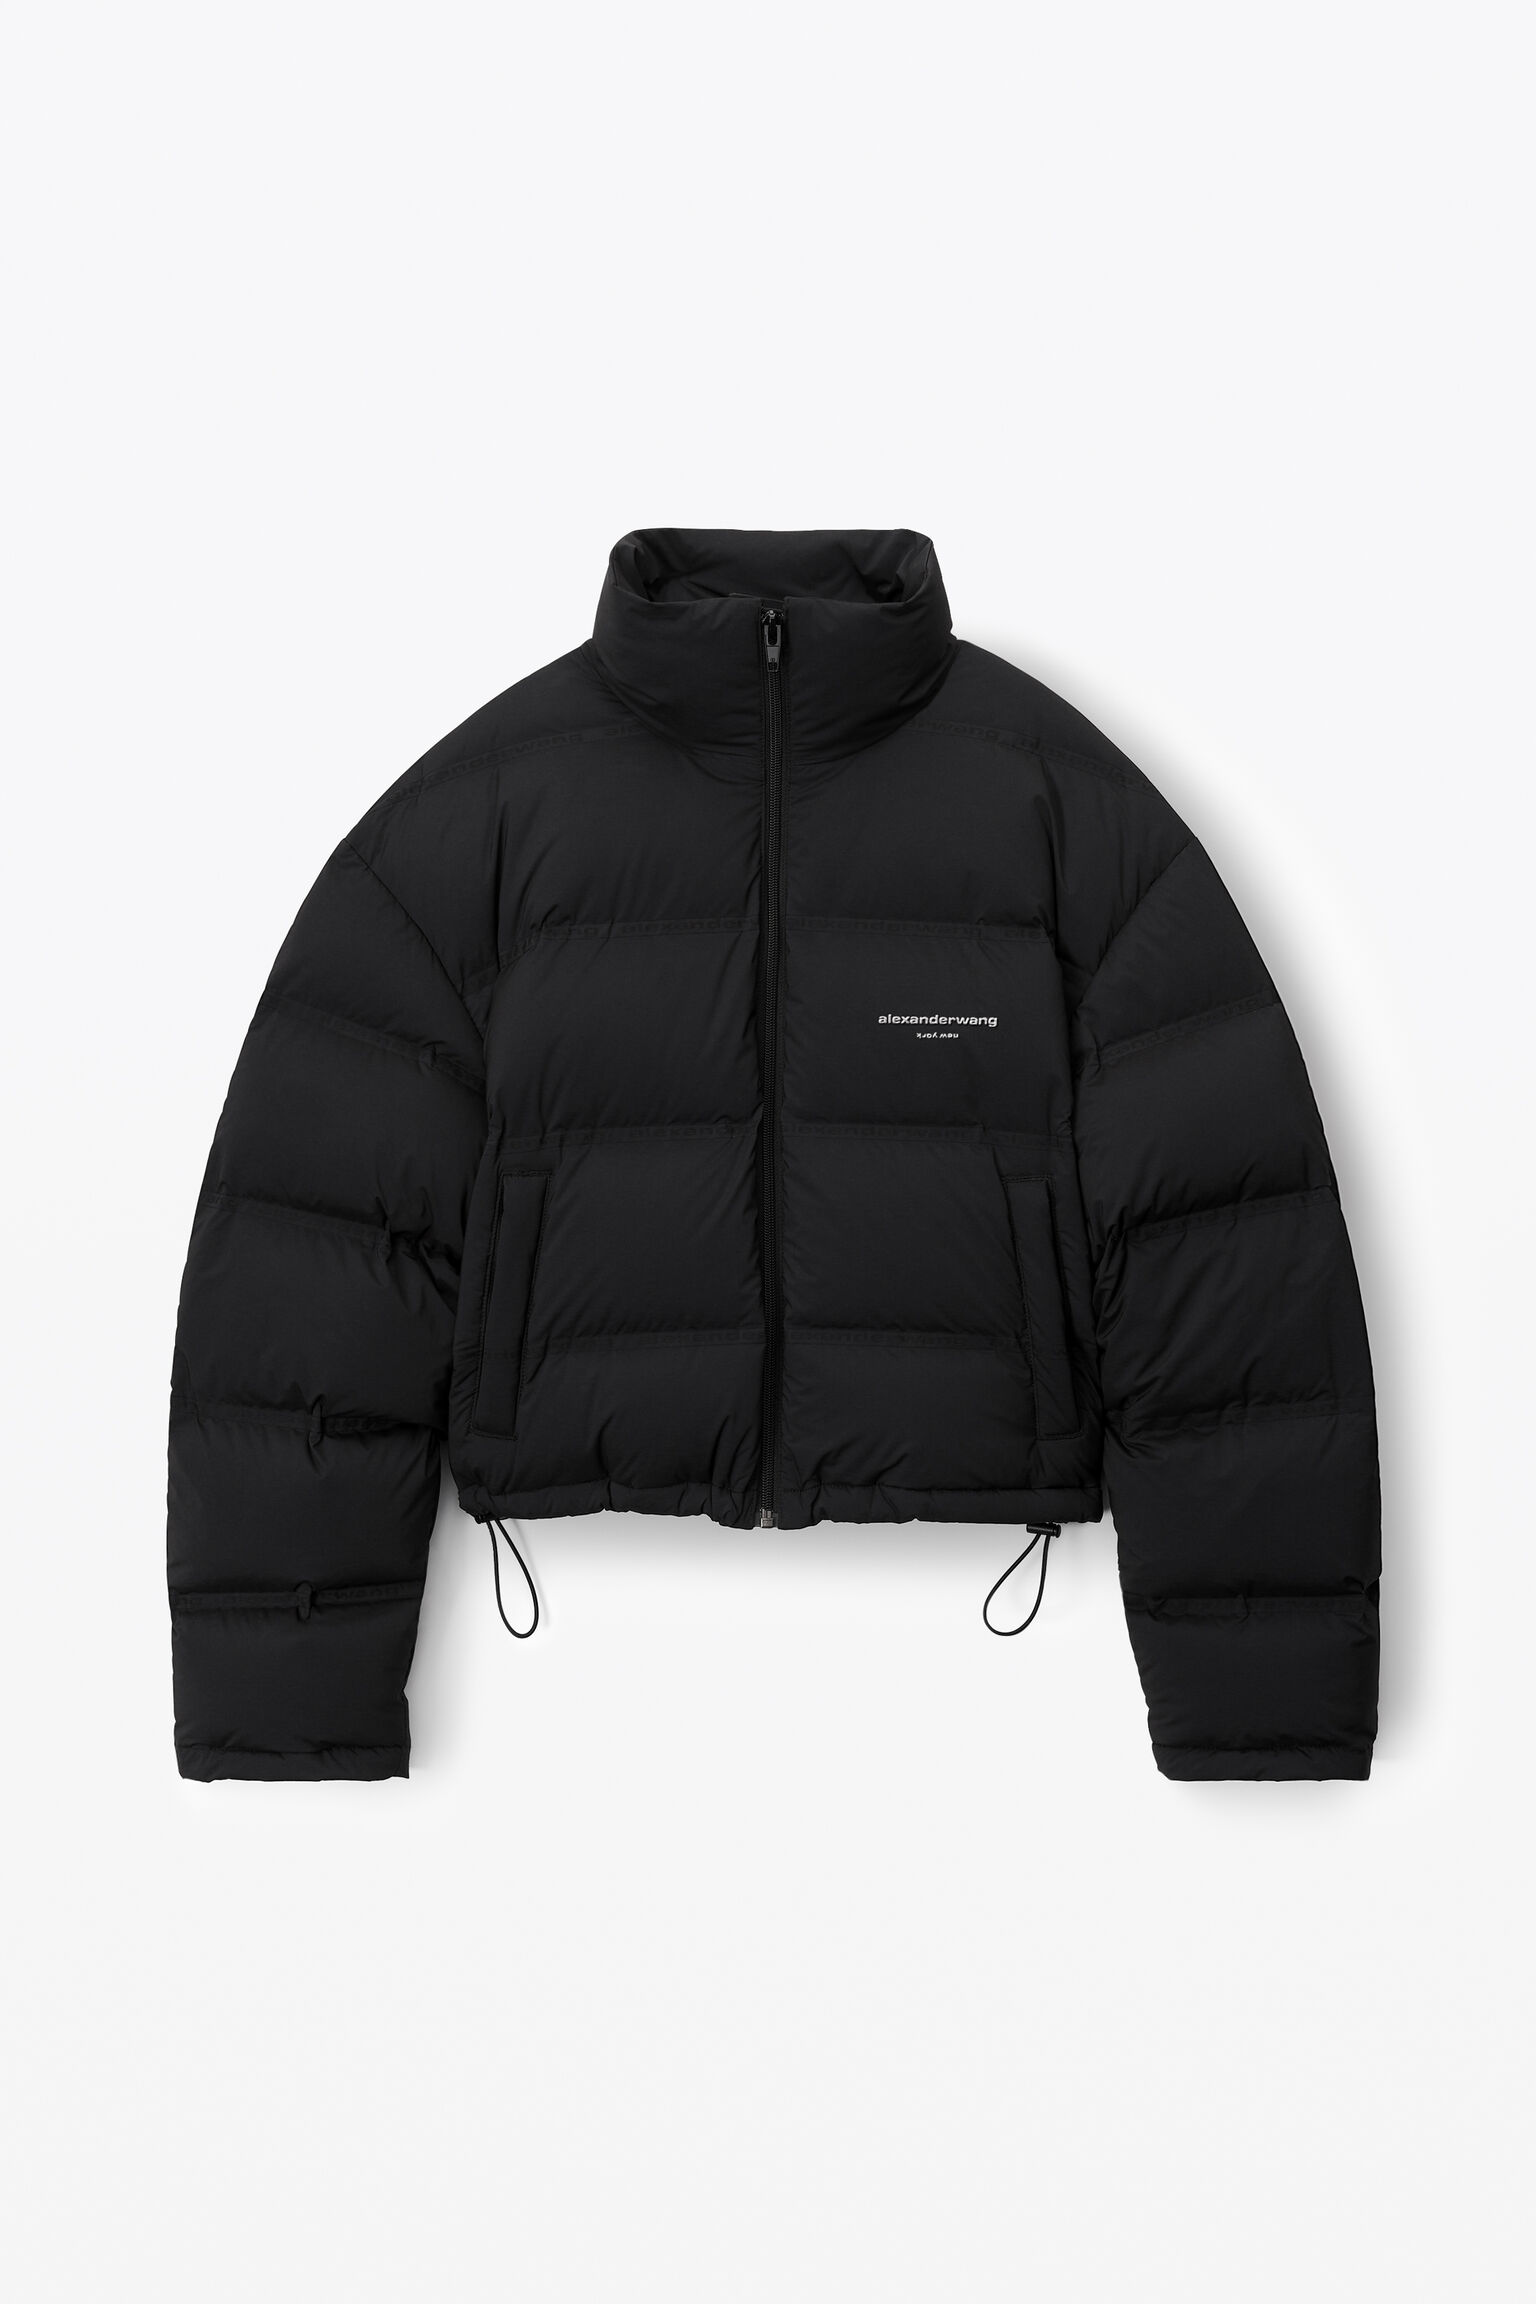 Stock Crop Puffer Jacket in Black